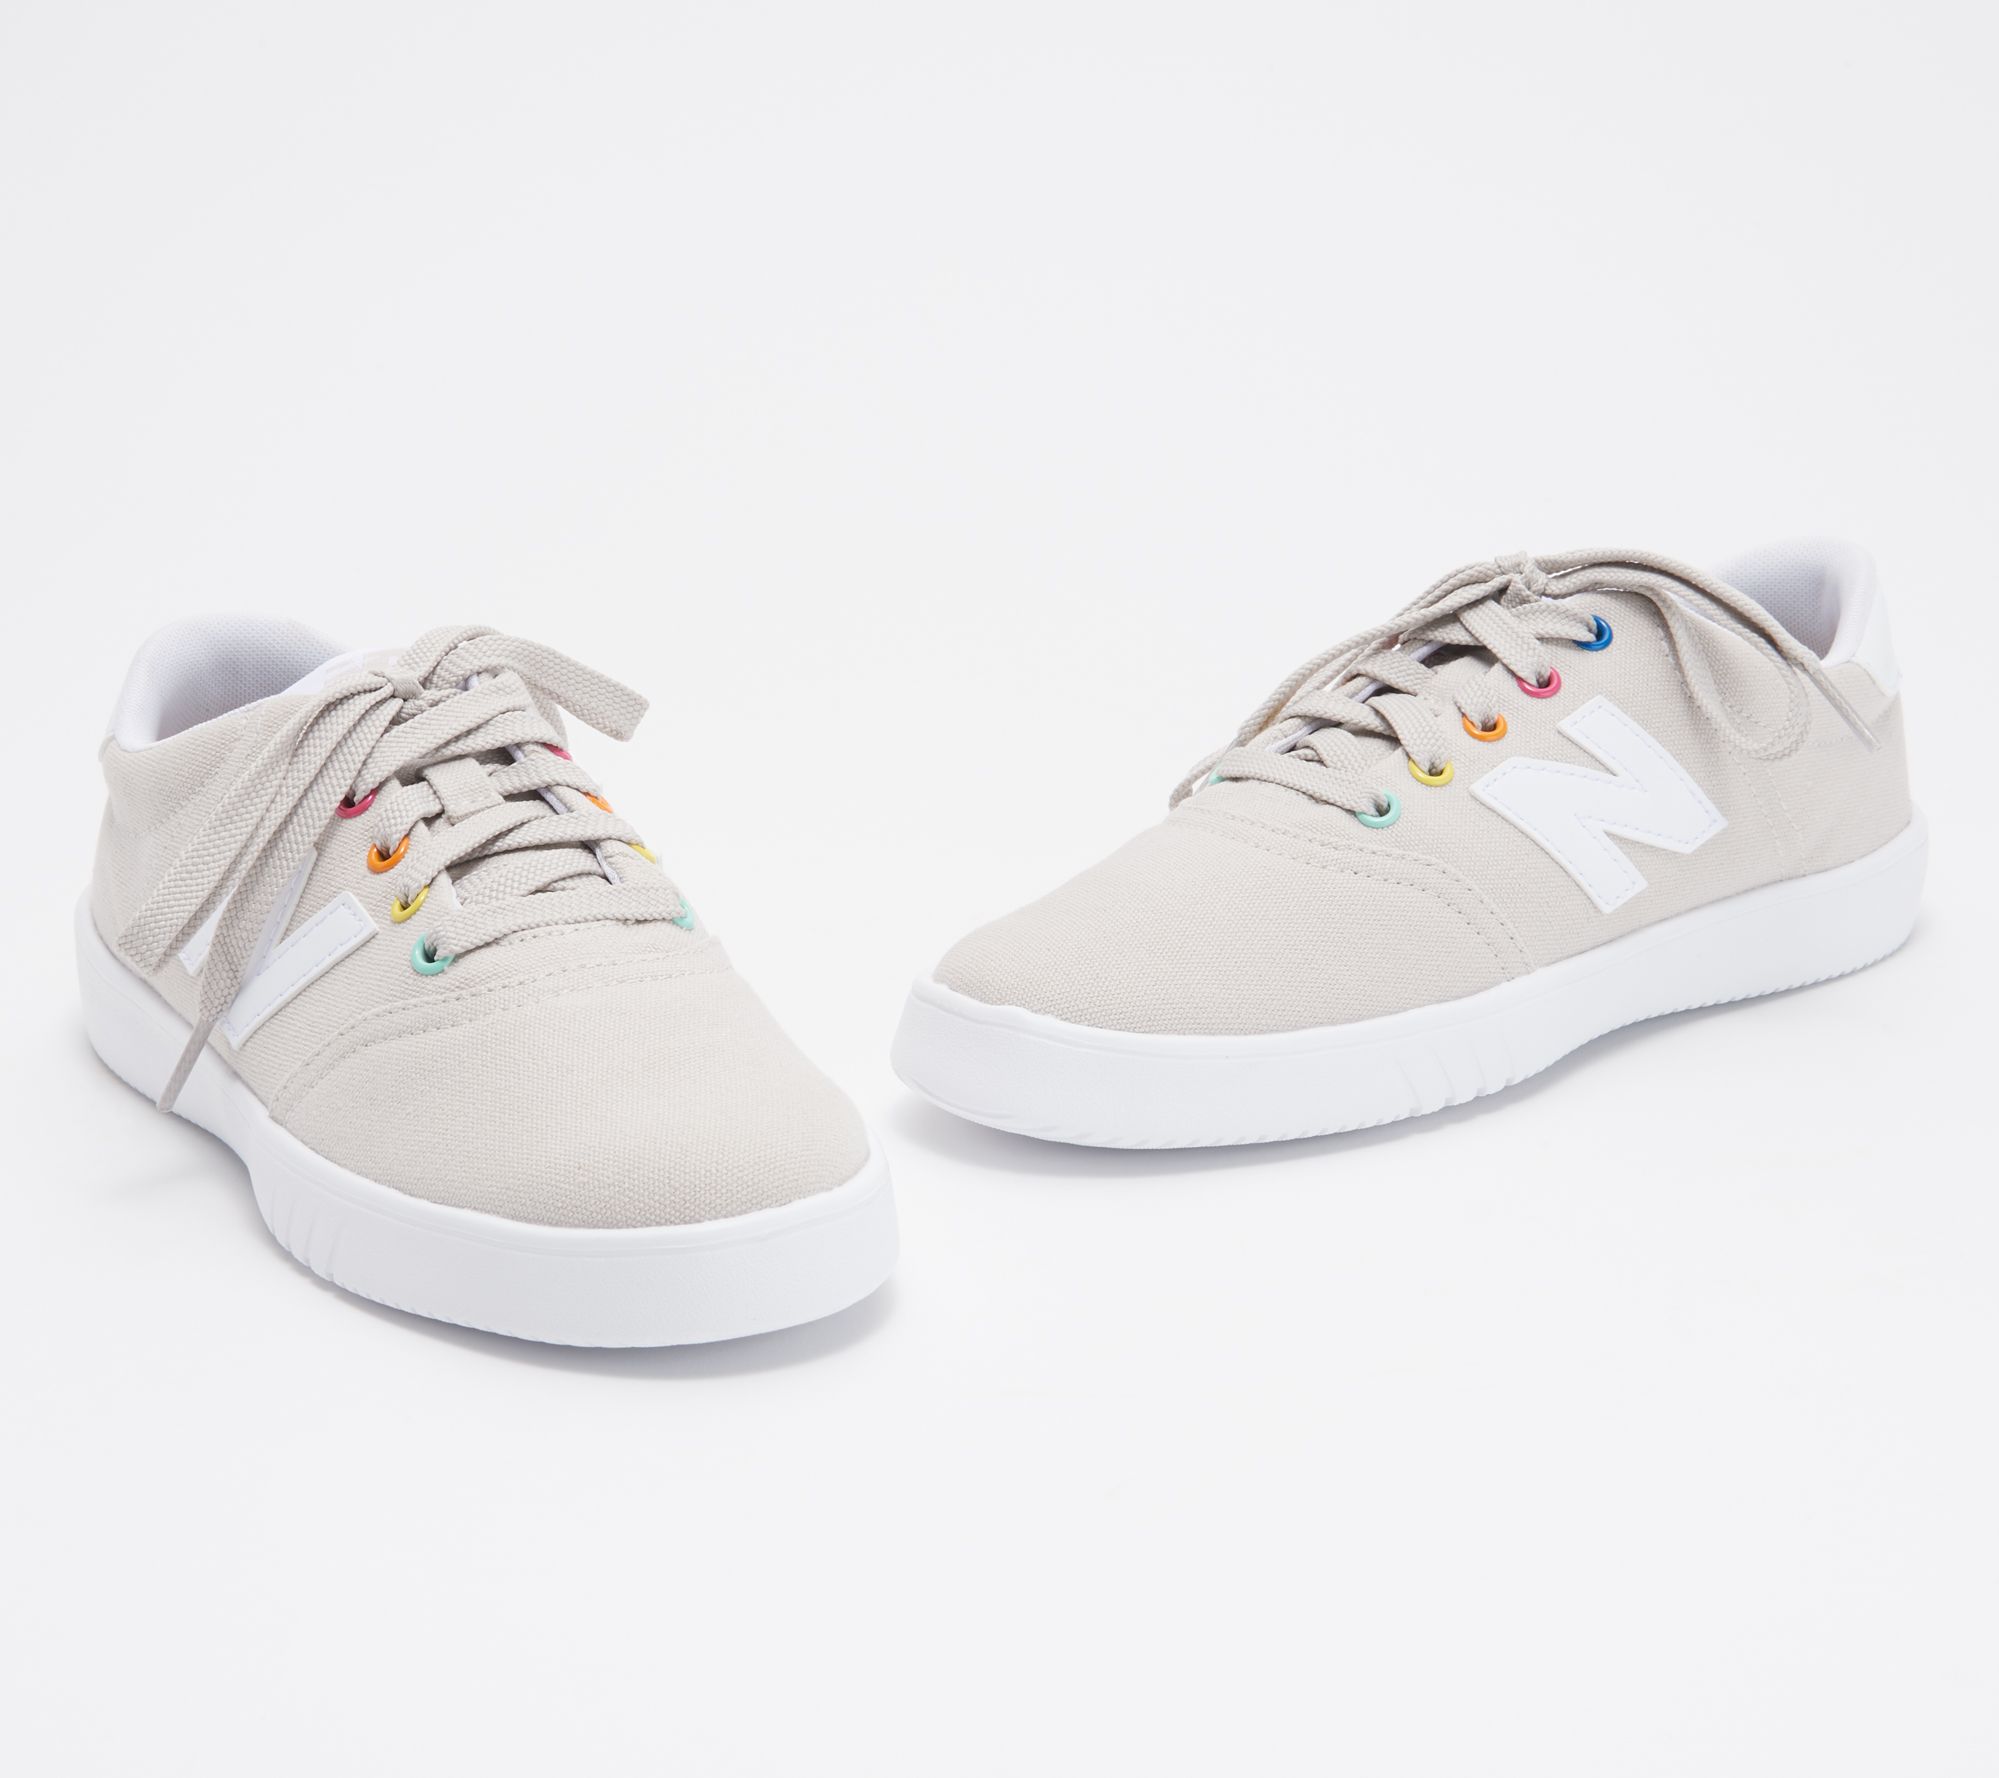 New Balance x Isaac Mizrahi Canvas Sneakers - CT15 - QVC.com